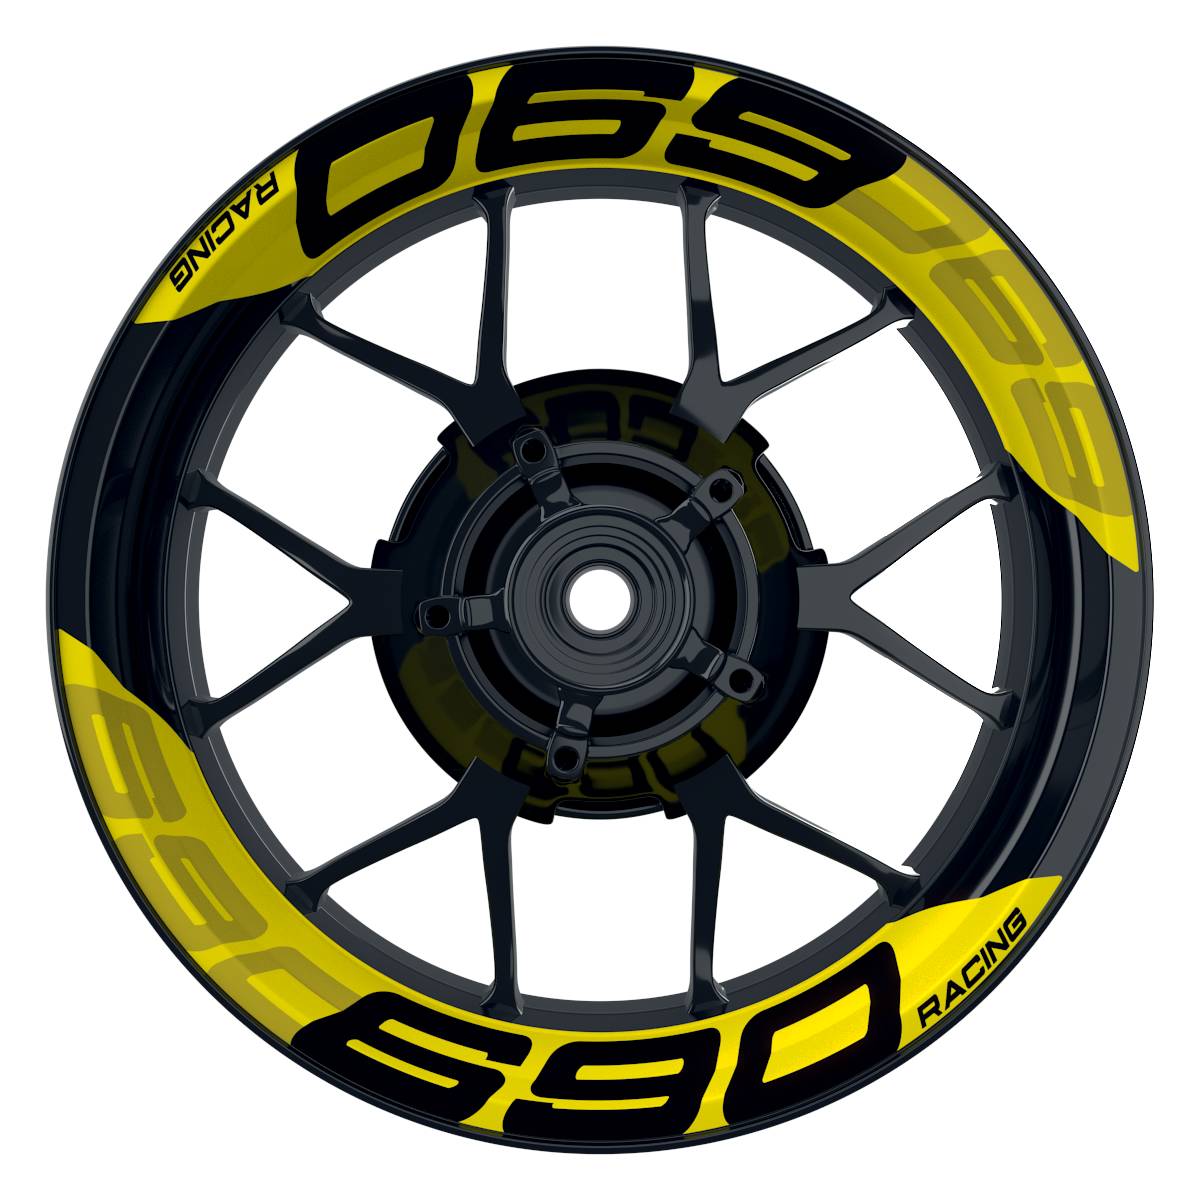 Wheelsticker Felgenaufkleber KTM Racing 690 einfarbig V2 gelb Frontansicht